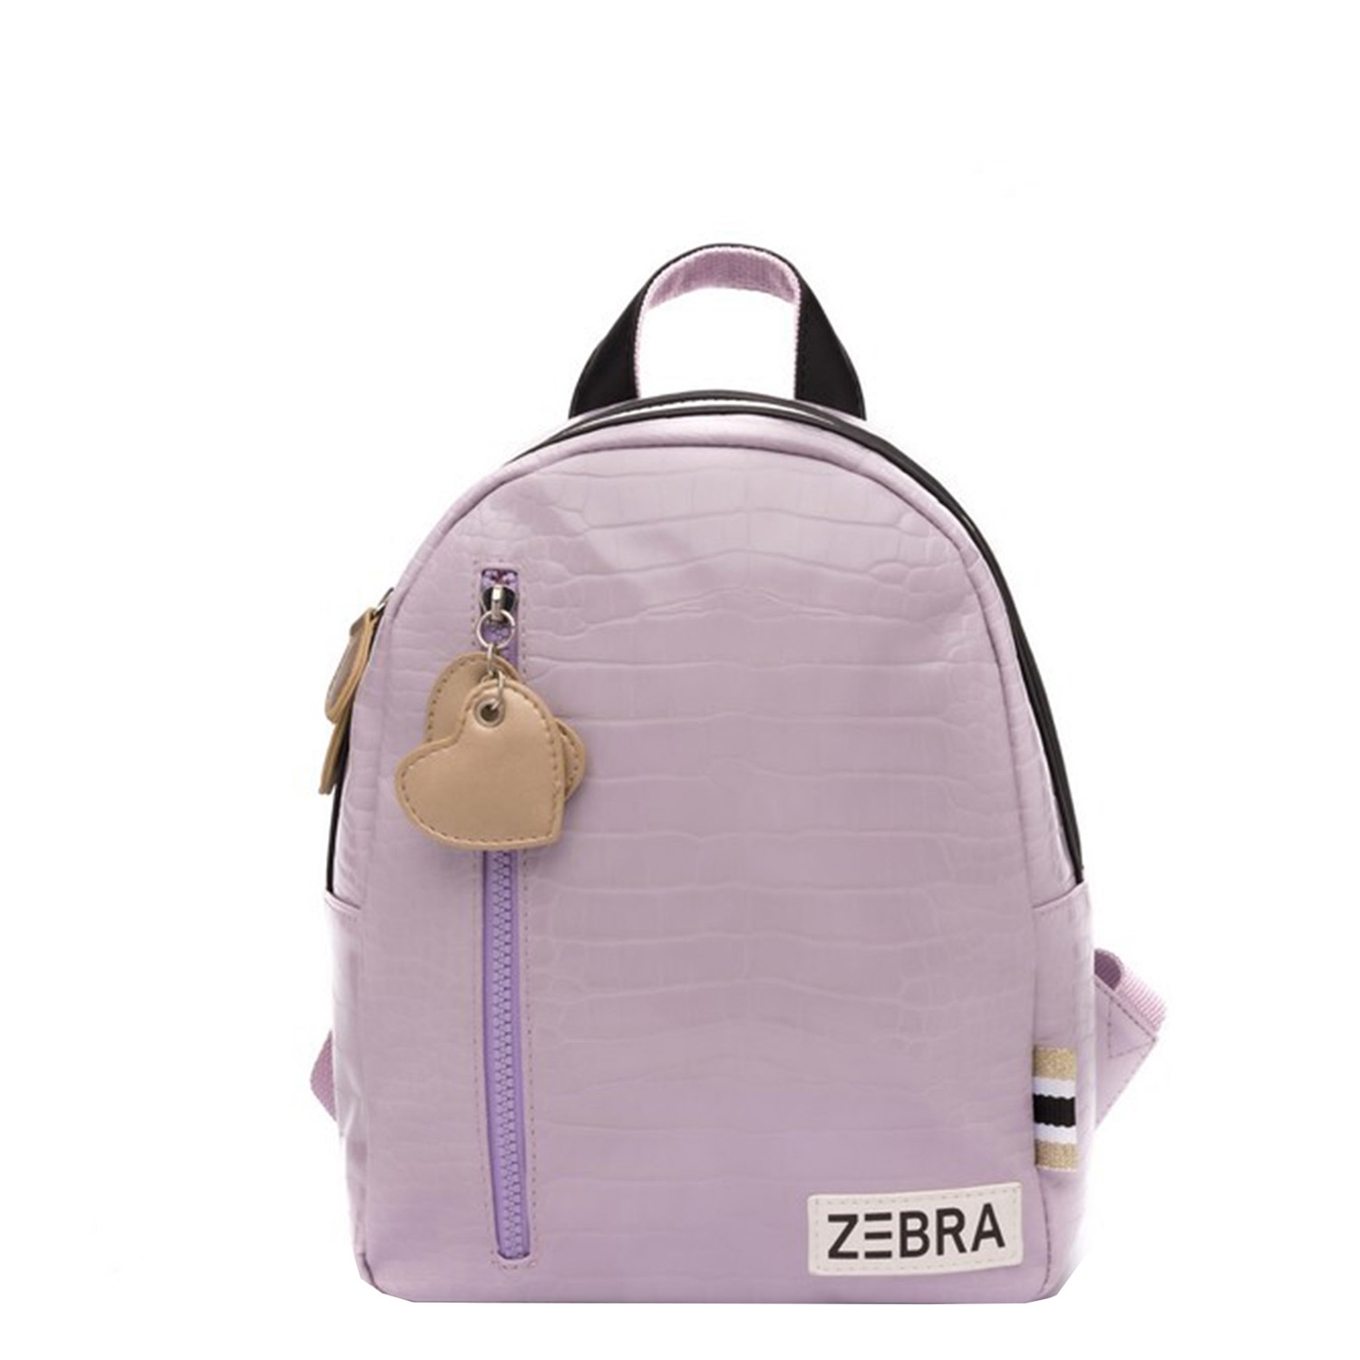 Zebra Trends Girls Rugzak S croco purple Kindertas